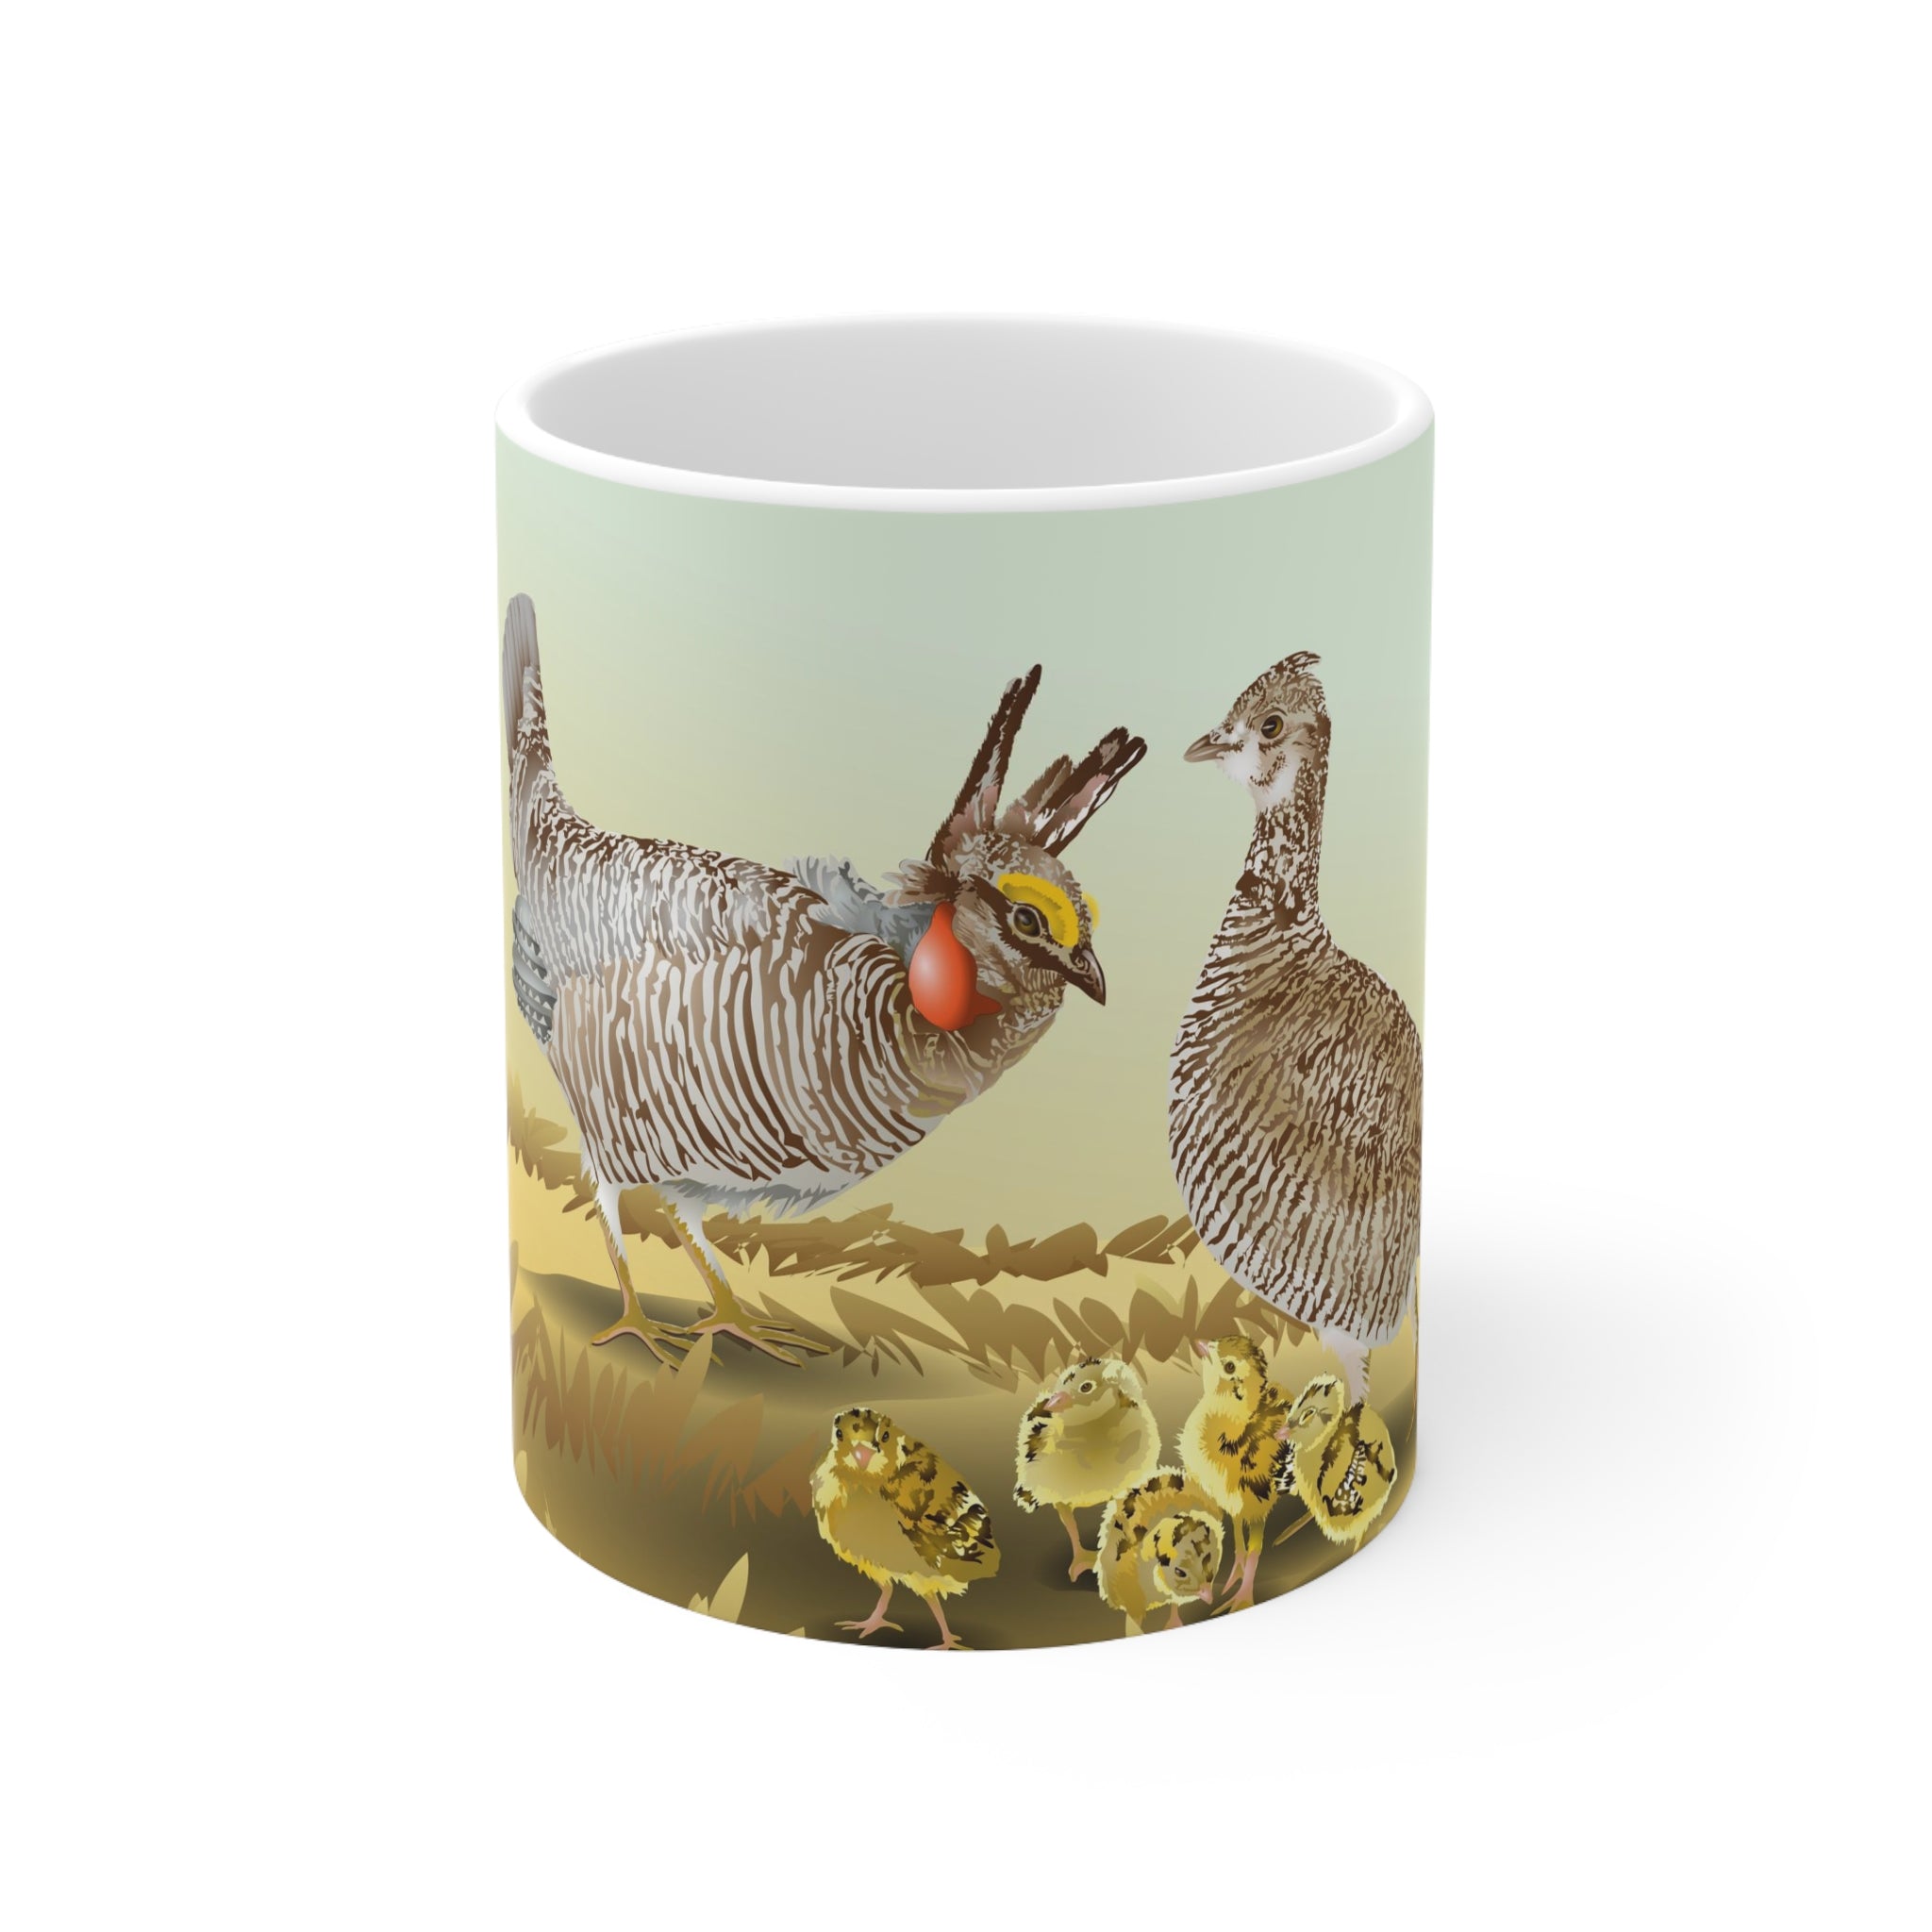 Prairie Chicken Ceramic Mug 11oz